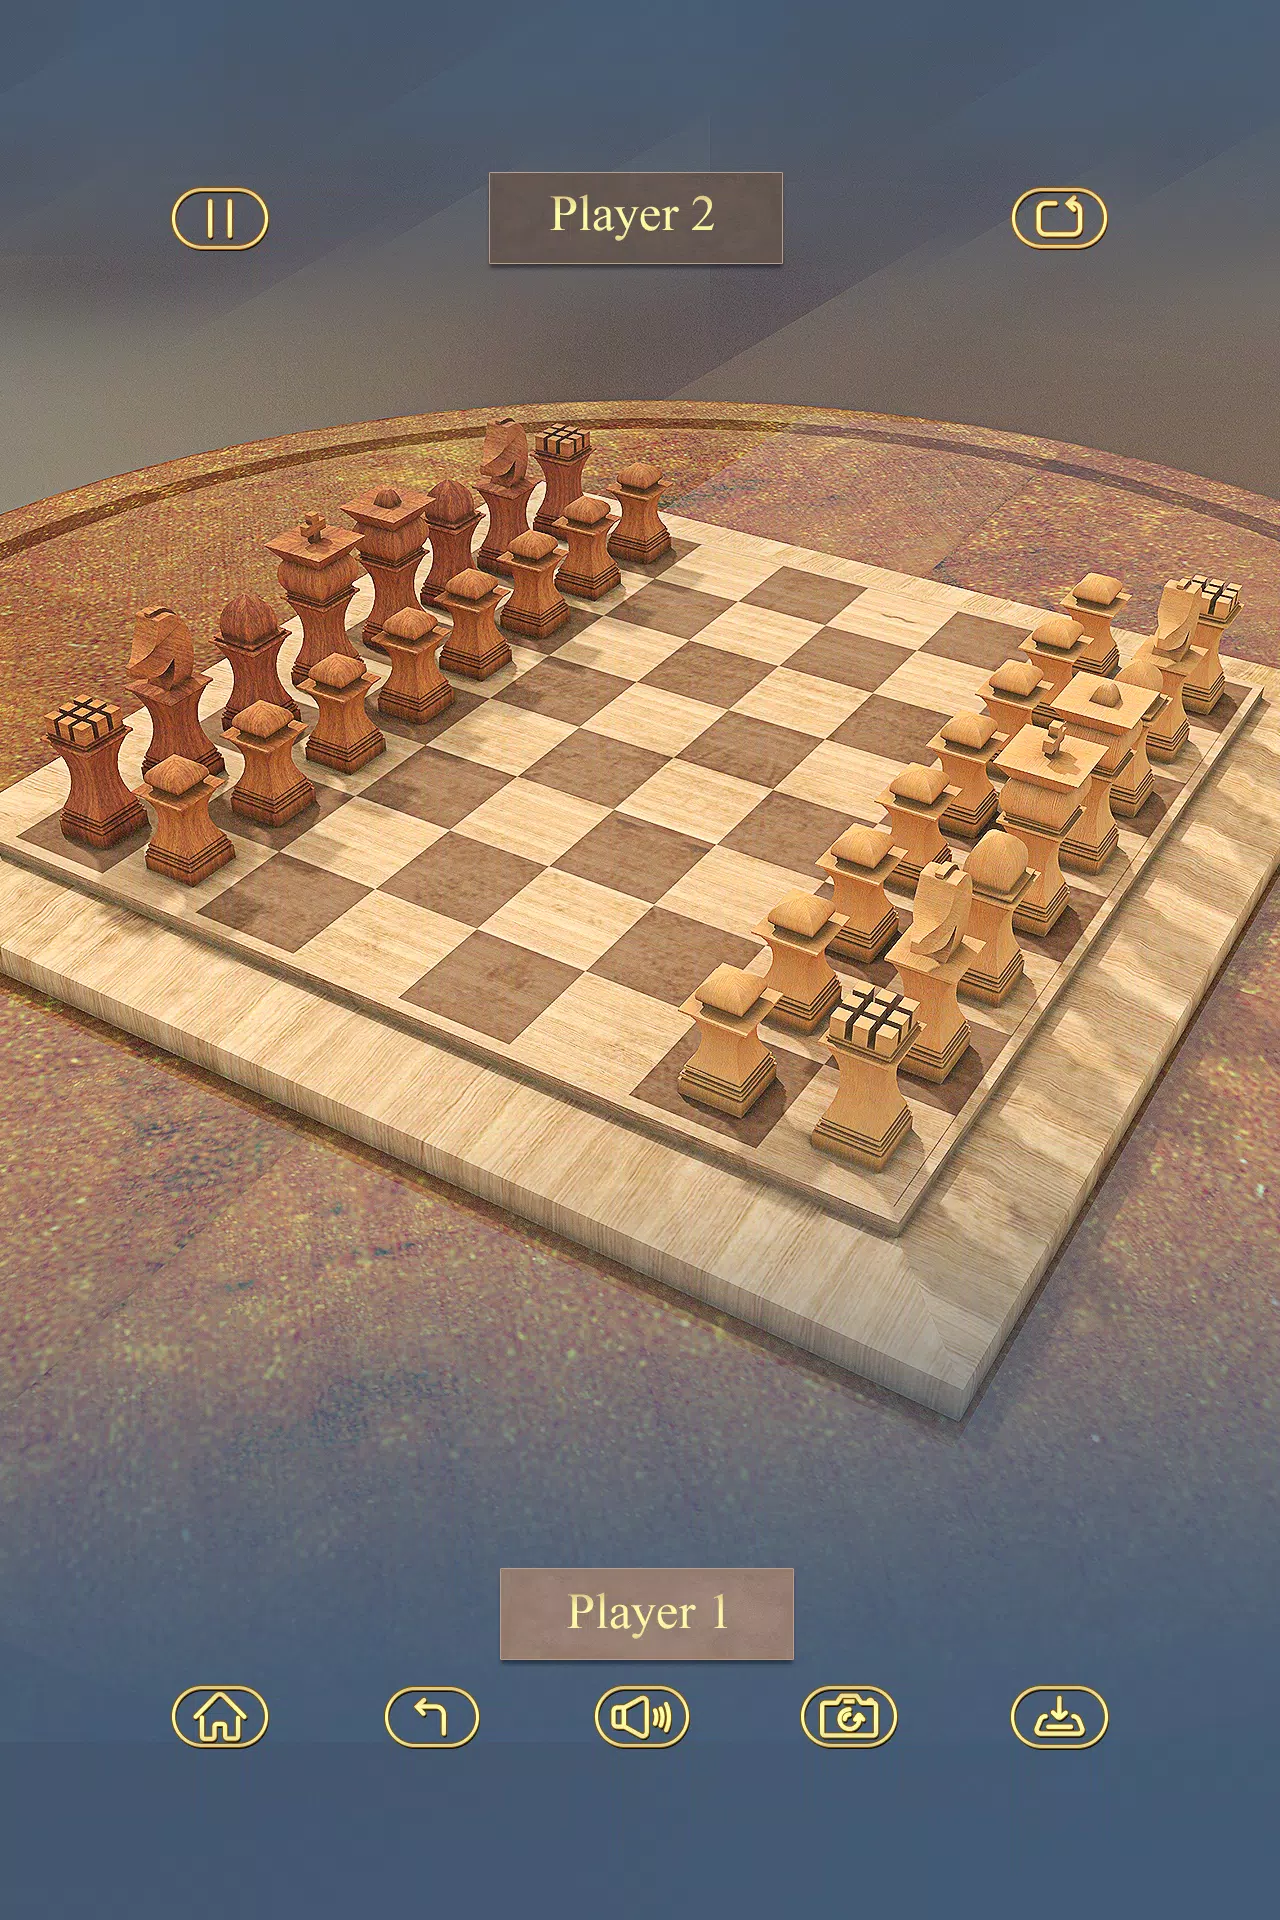 Download do APK de Jogo de xadrez 2 jogadores para Android